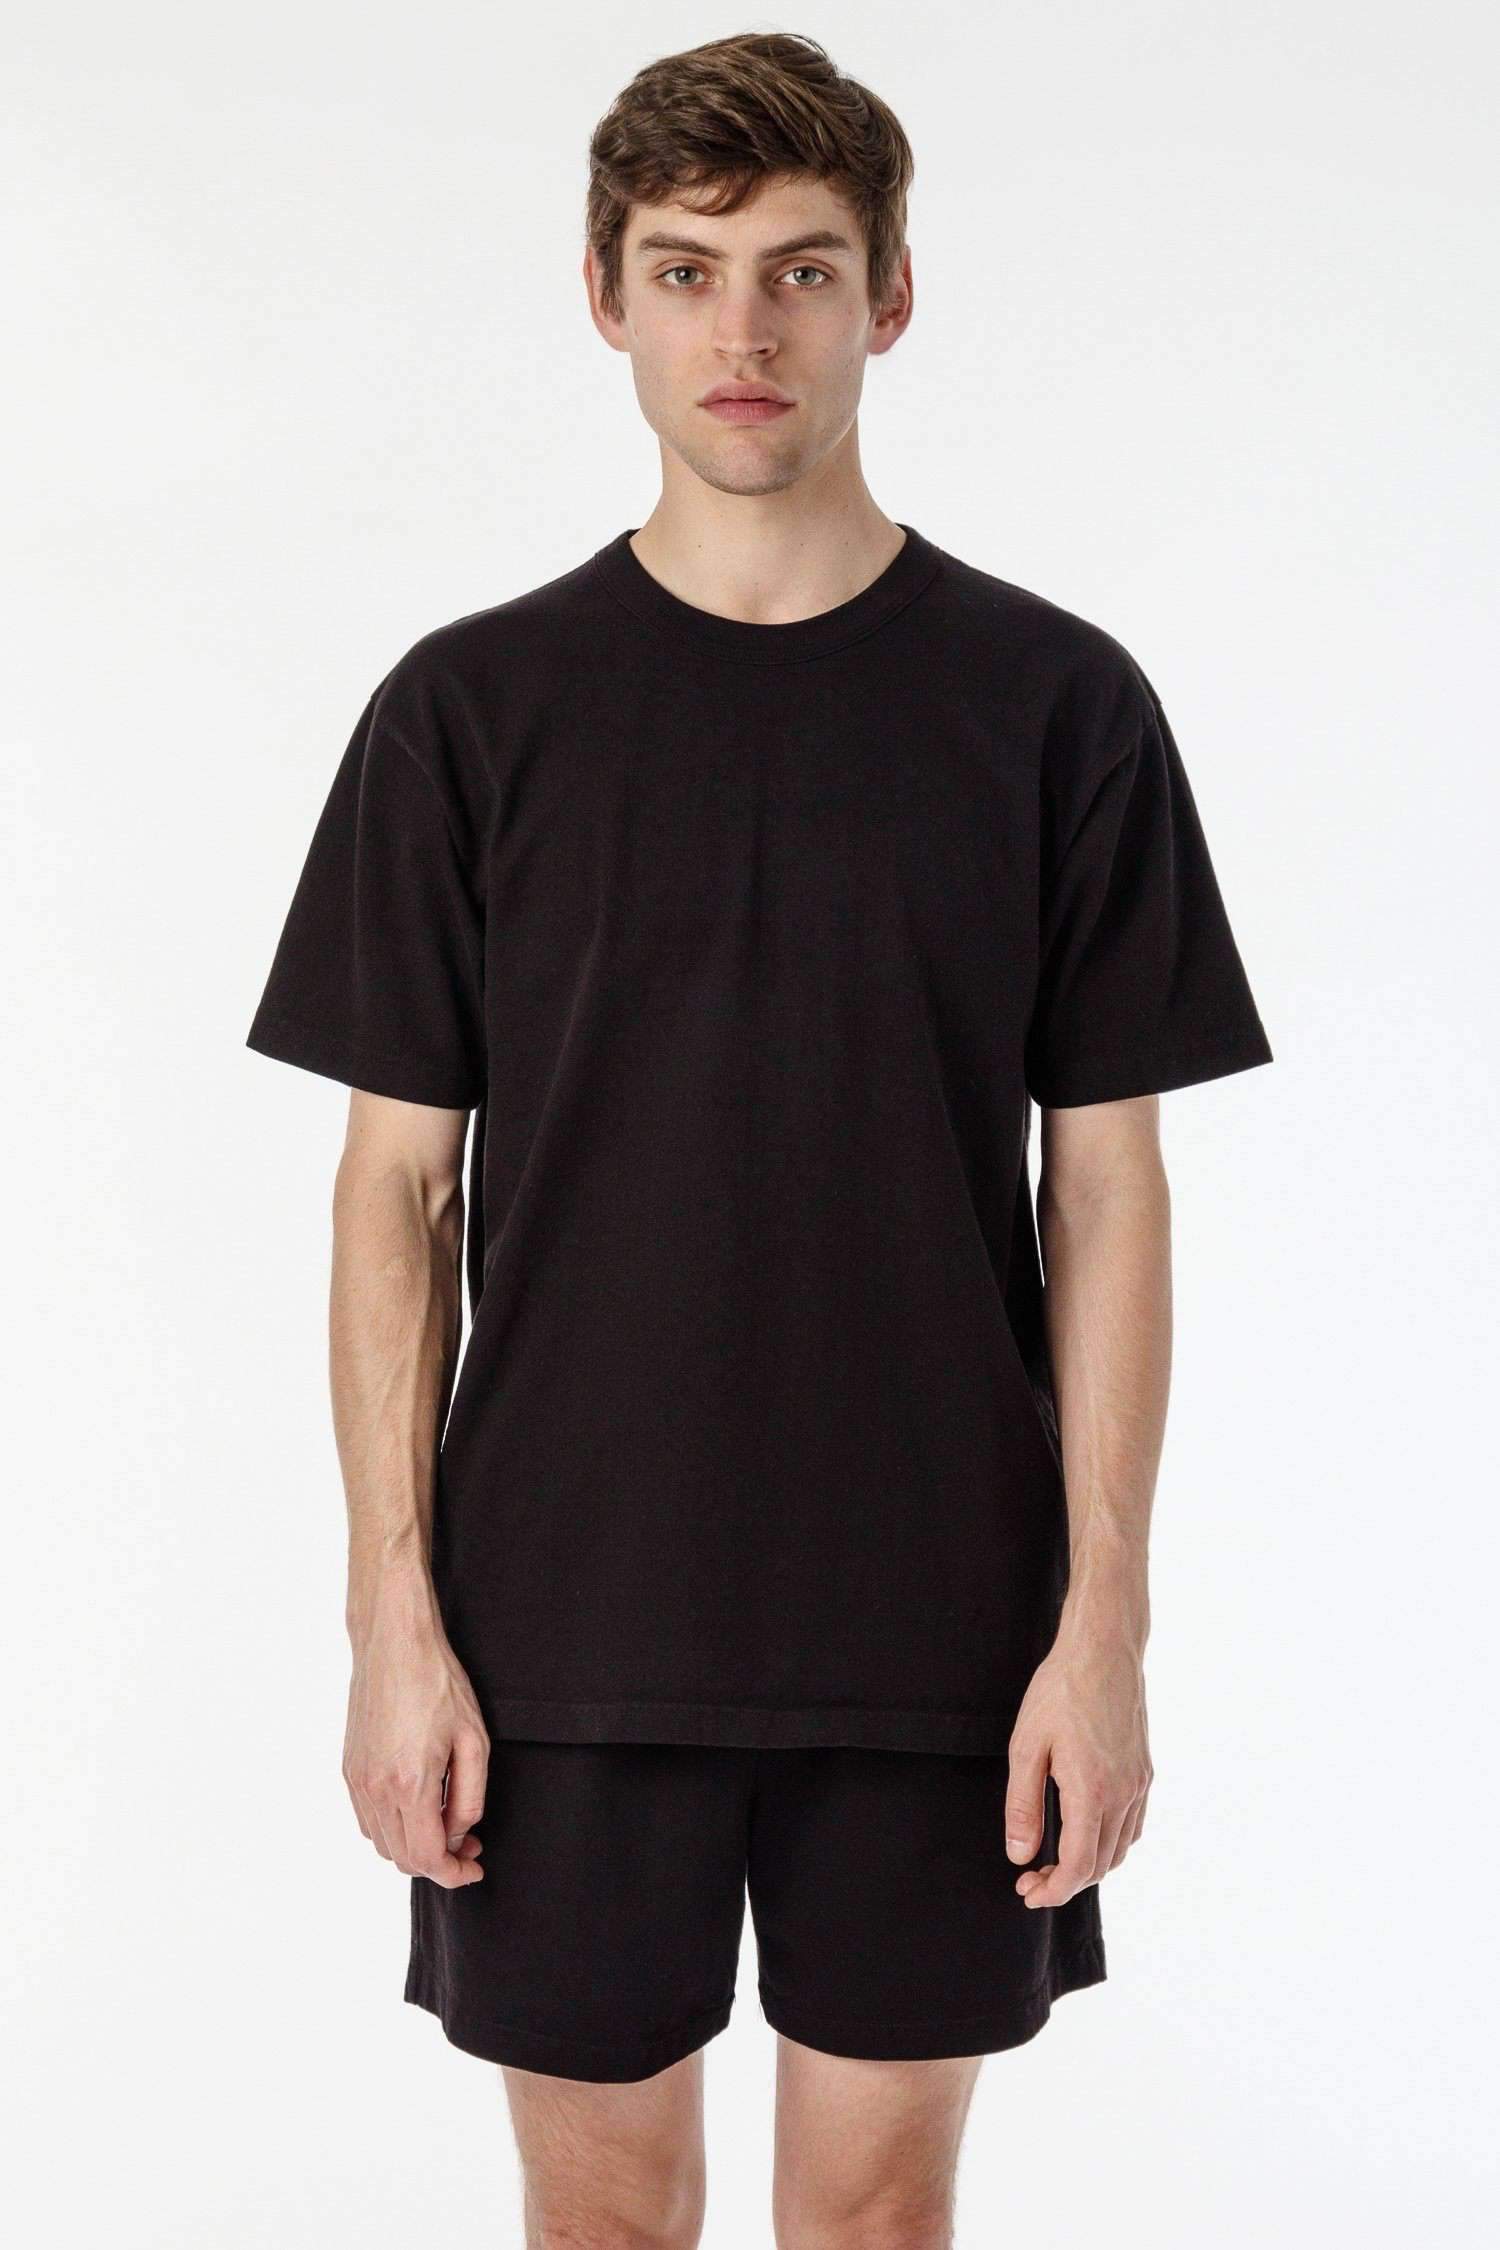 1203GD - Short Sleeve Binding Garment Dye T-Shirt T-Shirt Los Angeles Apparel Black XS 